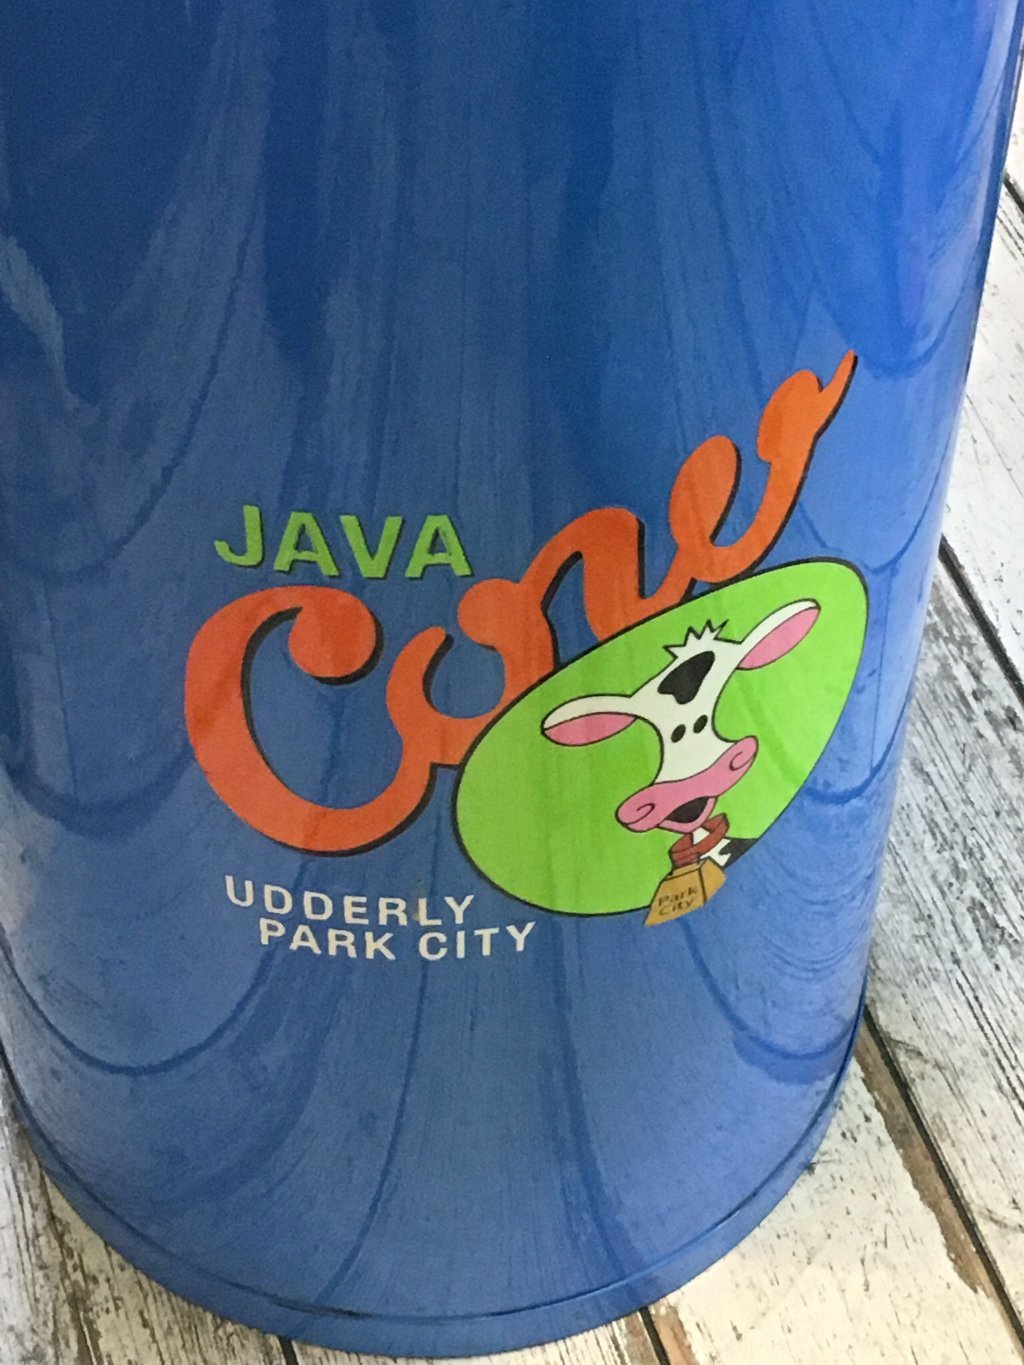 Java Cow Bakery